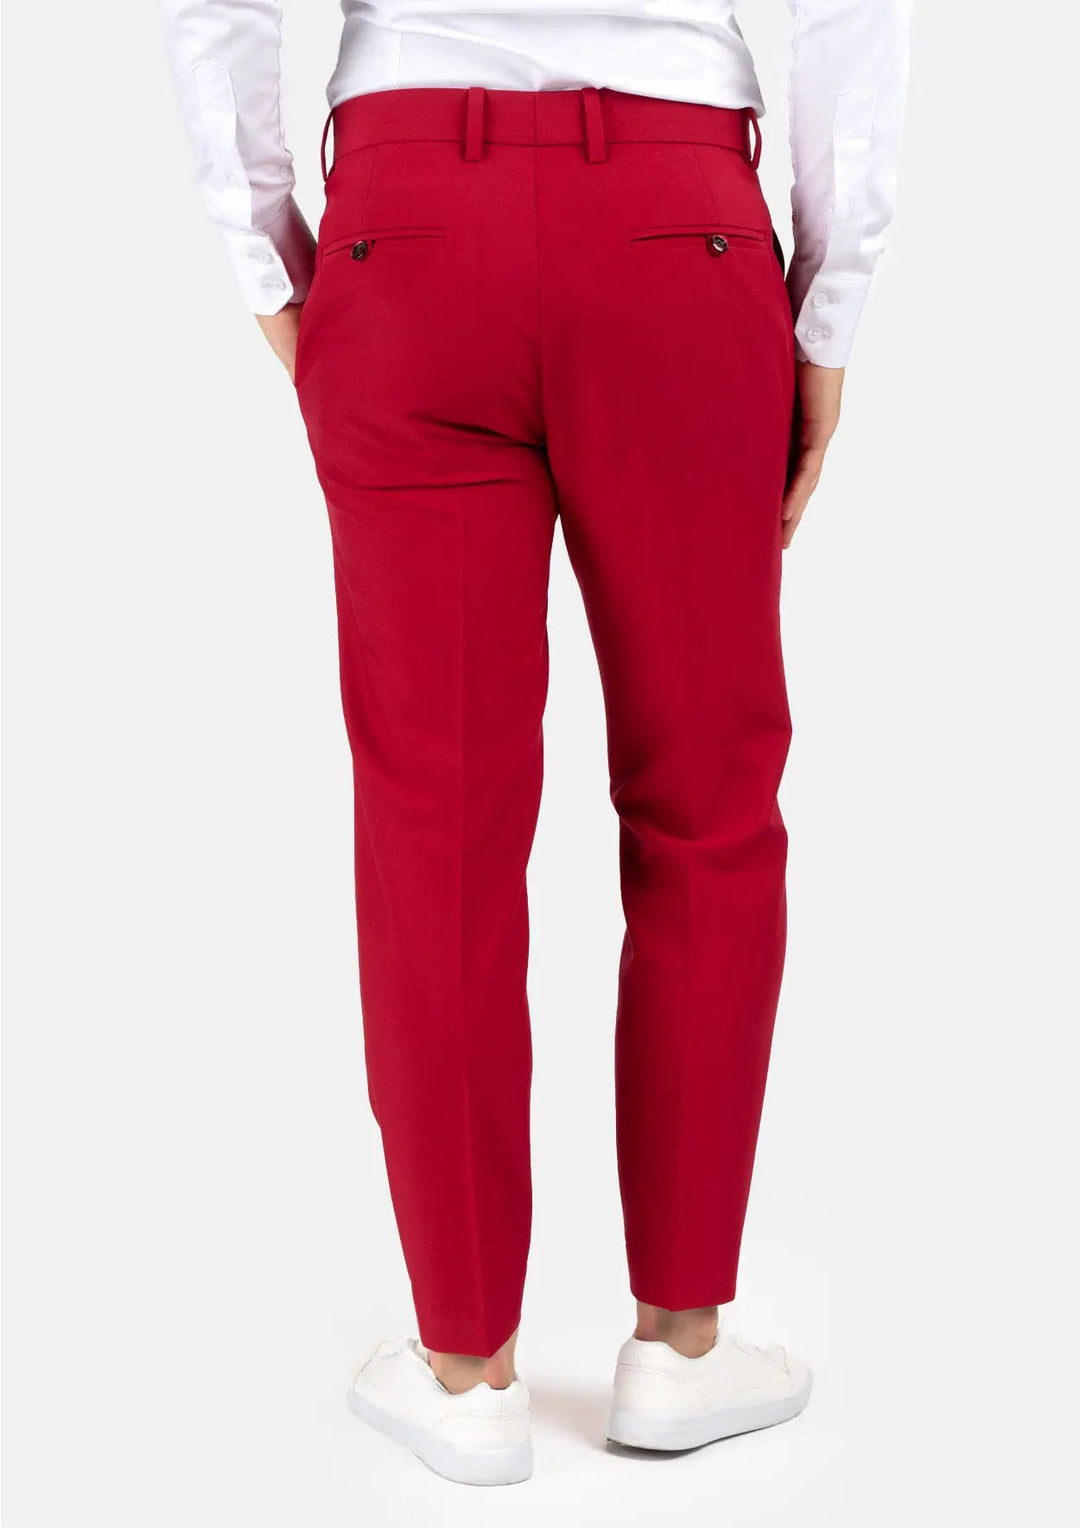 Spanish Red Stretch Pants - SARTORO